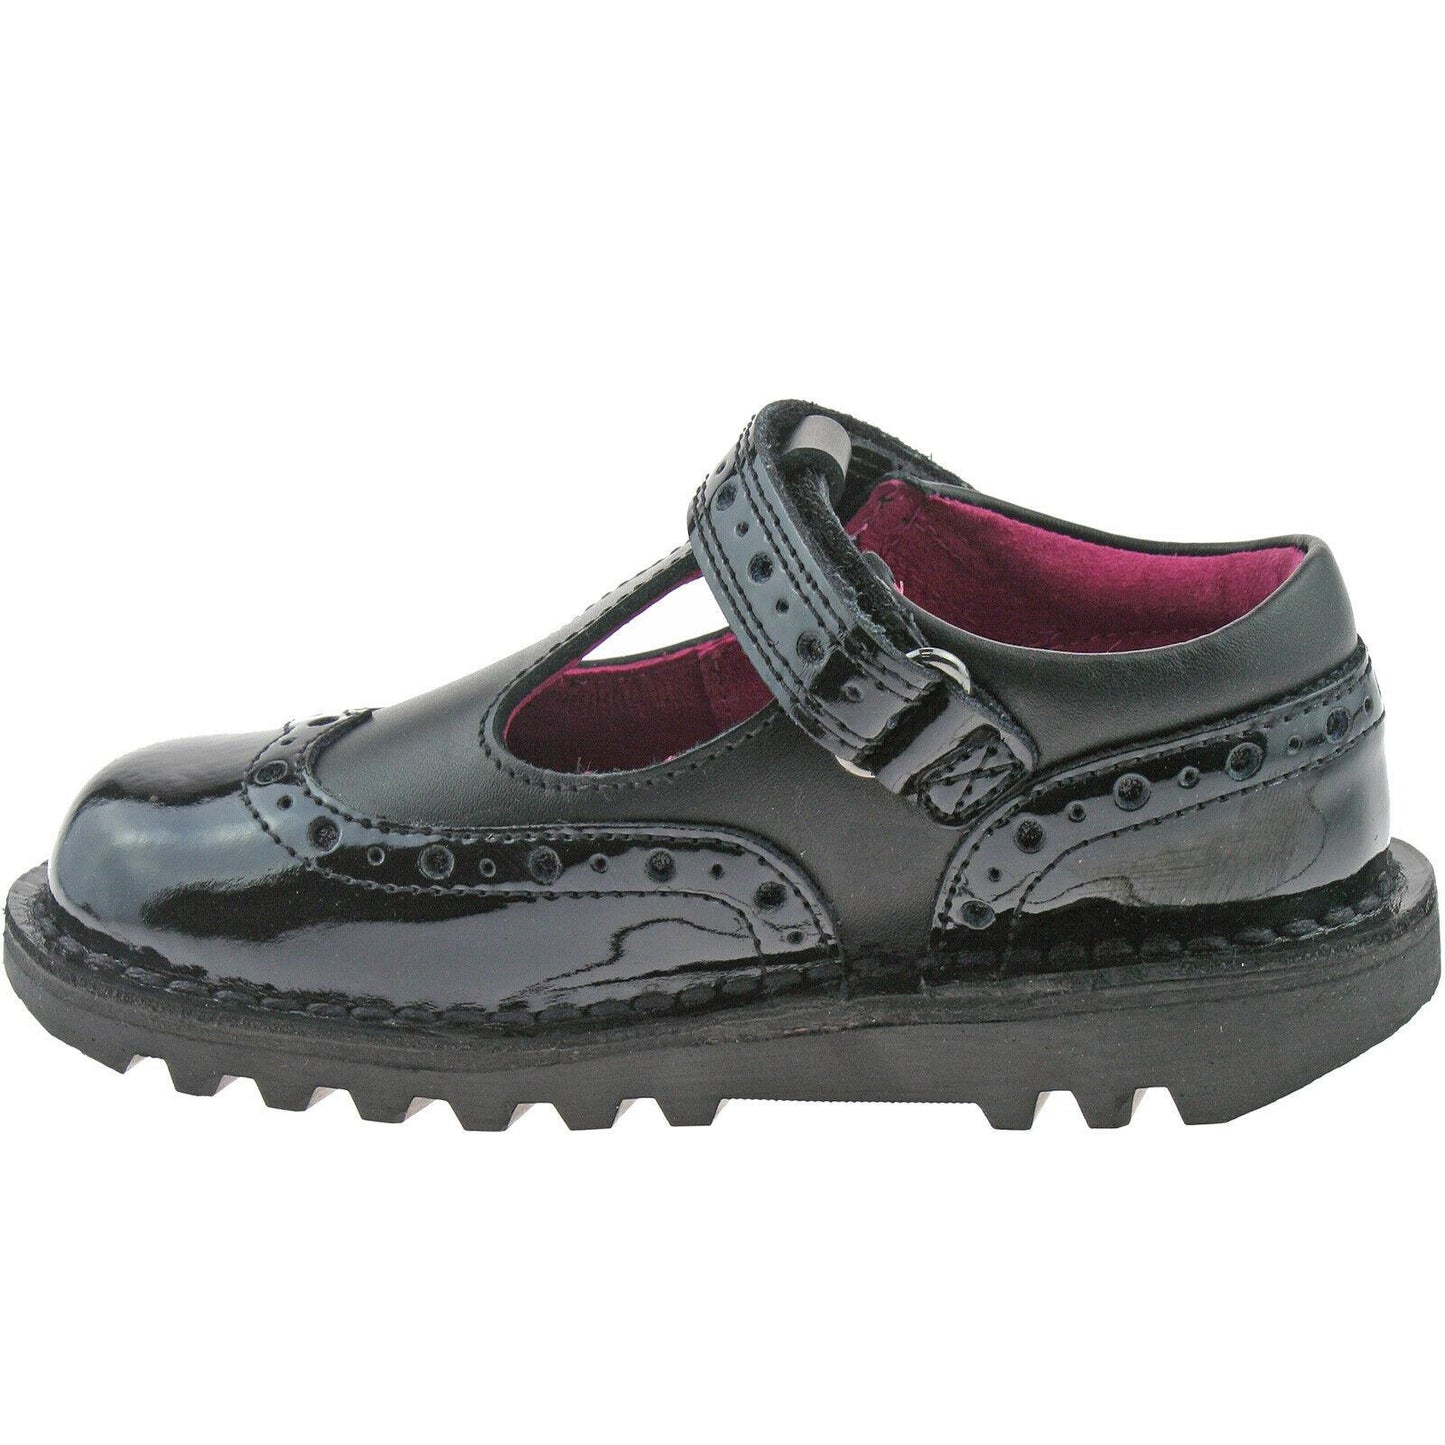 Girls Infant Kickers Kick T-bar Black Brogue Patent Leather School Shoes 1-13446